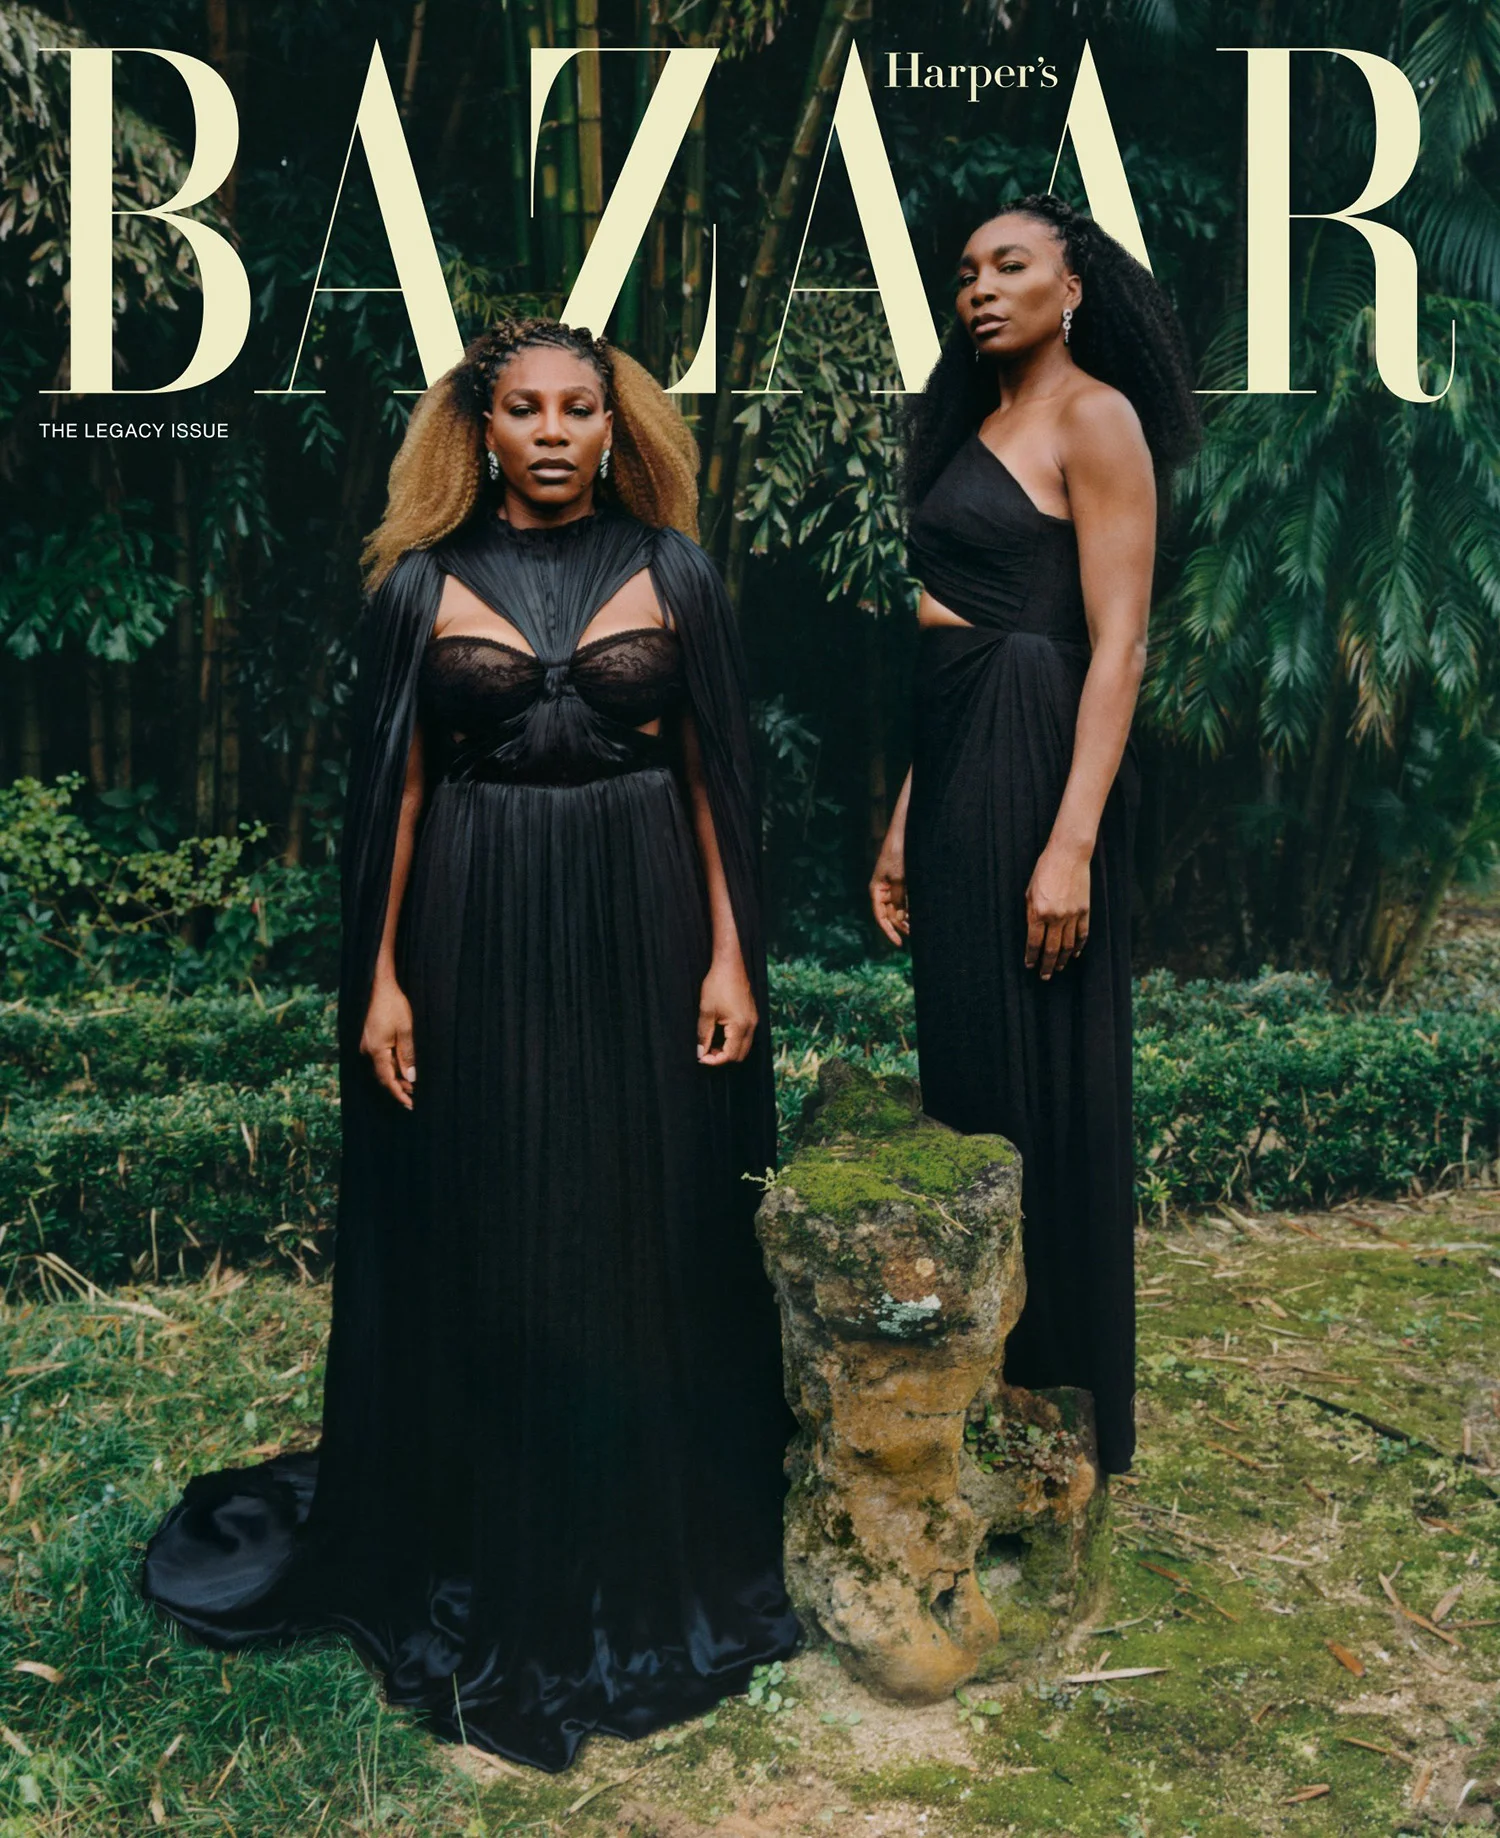 Venus and Serena Williams cover Harper’s Bazaar US March 2022 by Renell Medrano